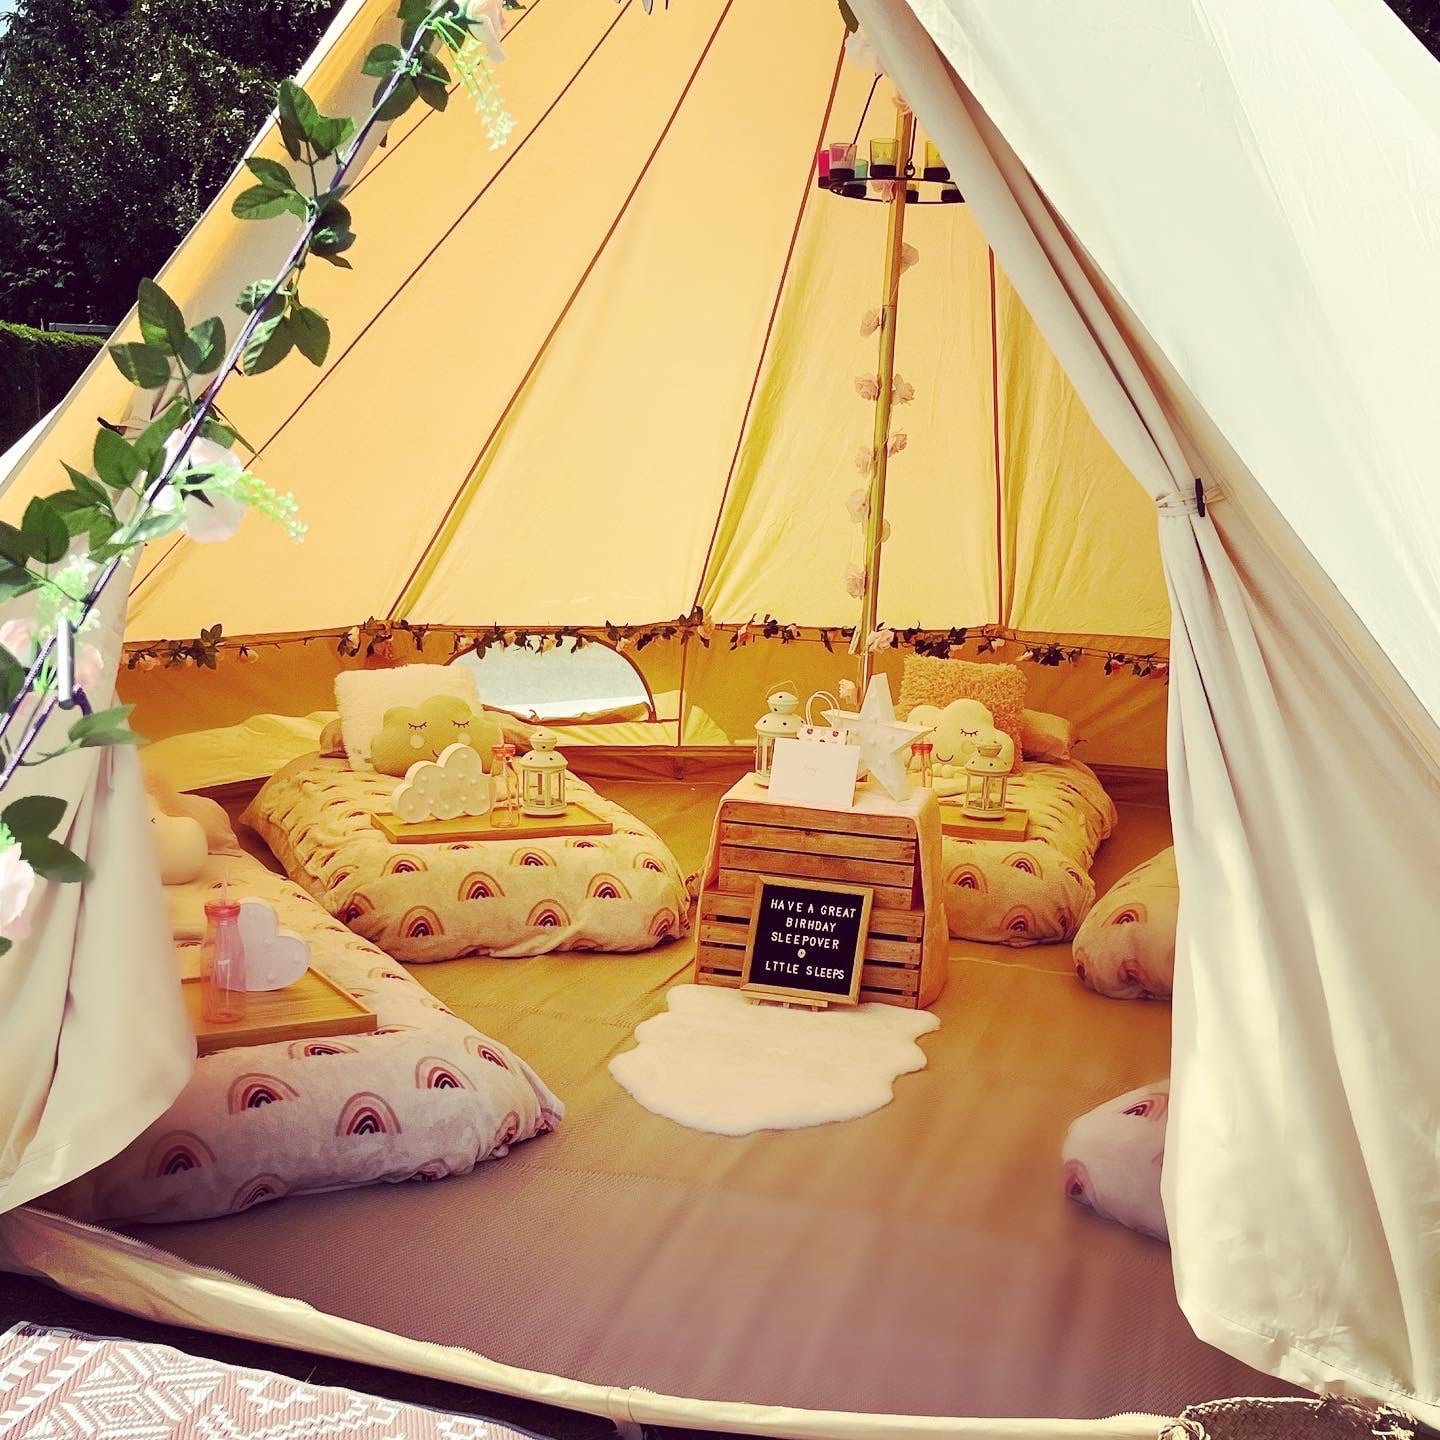 Sleepover Party Tents in Norfolk - Little Sleeps